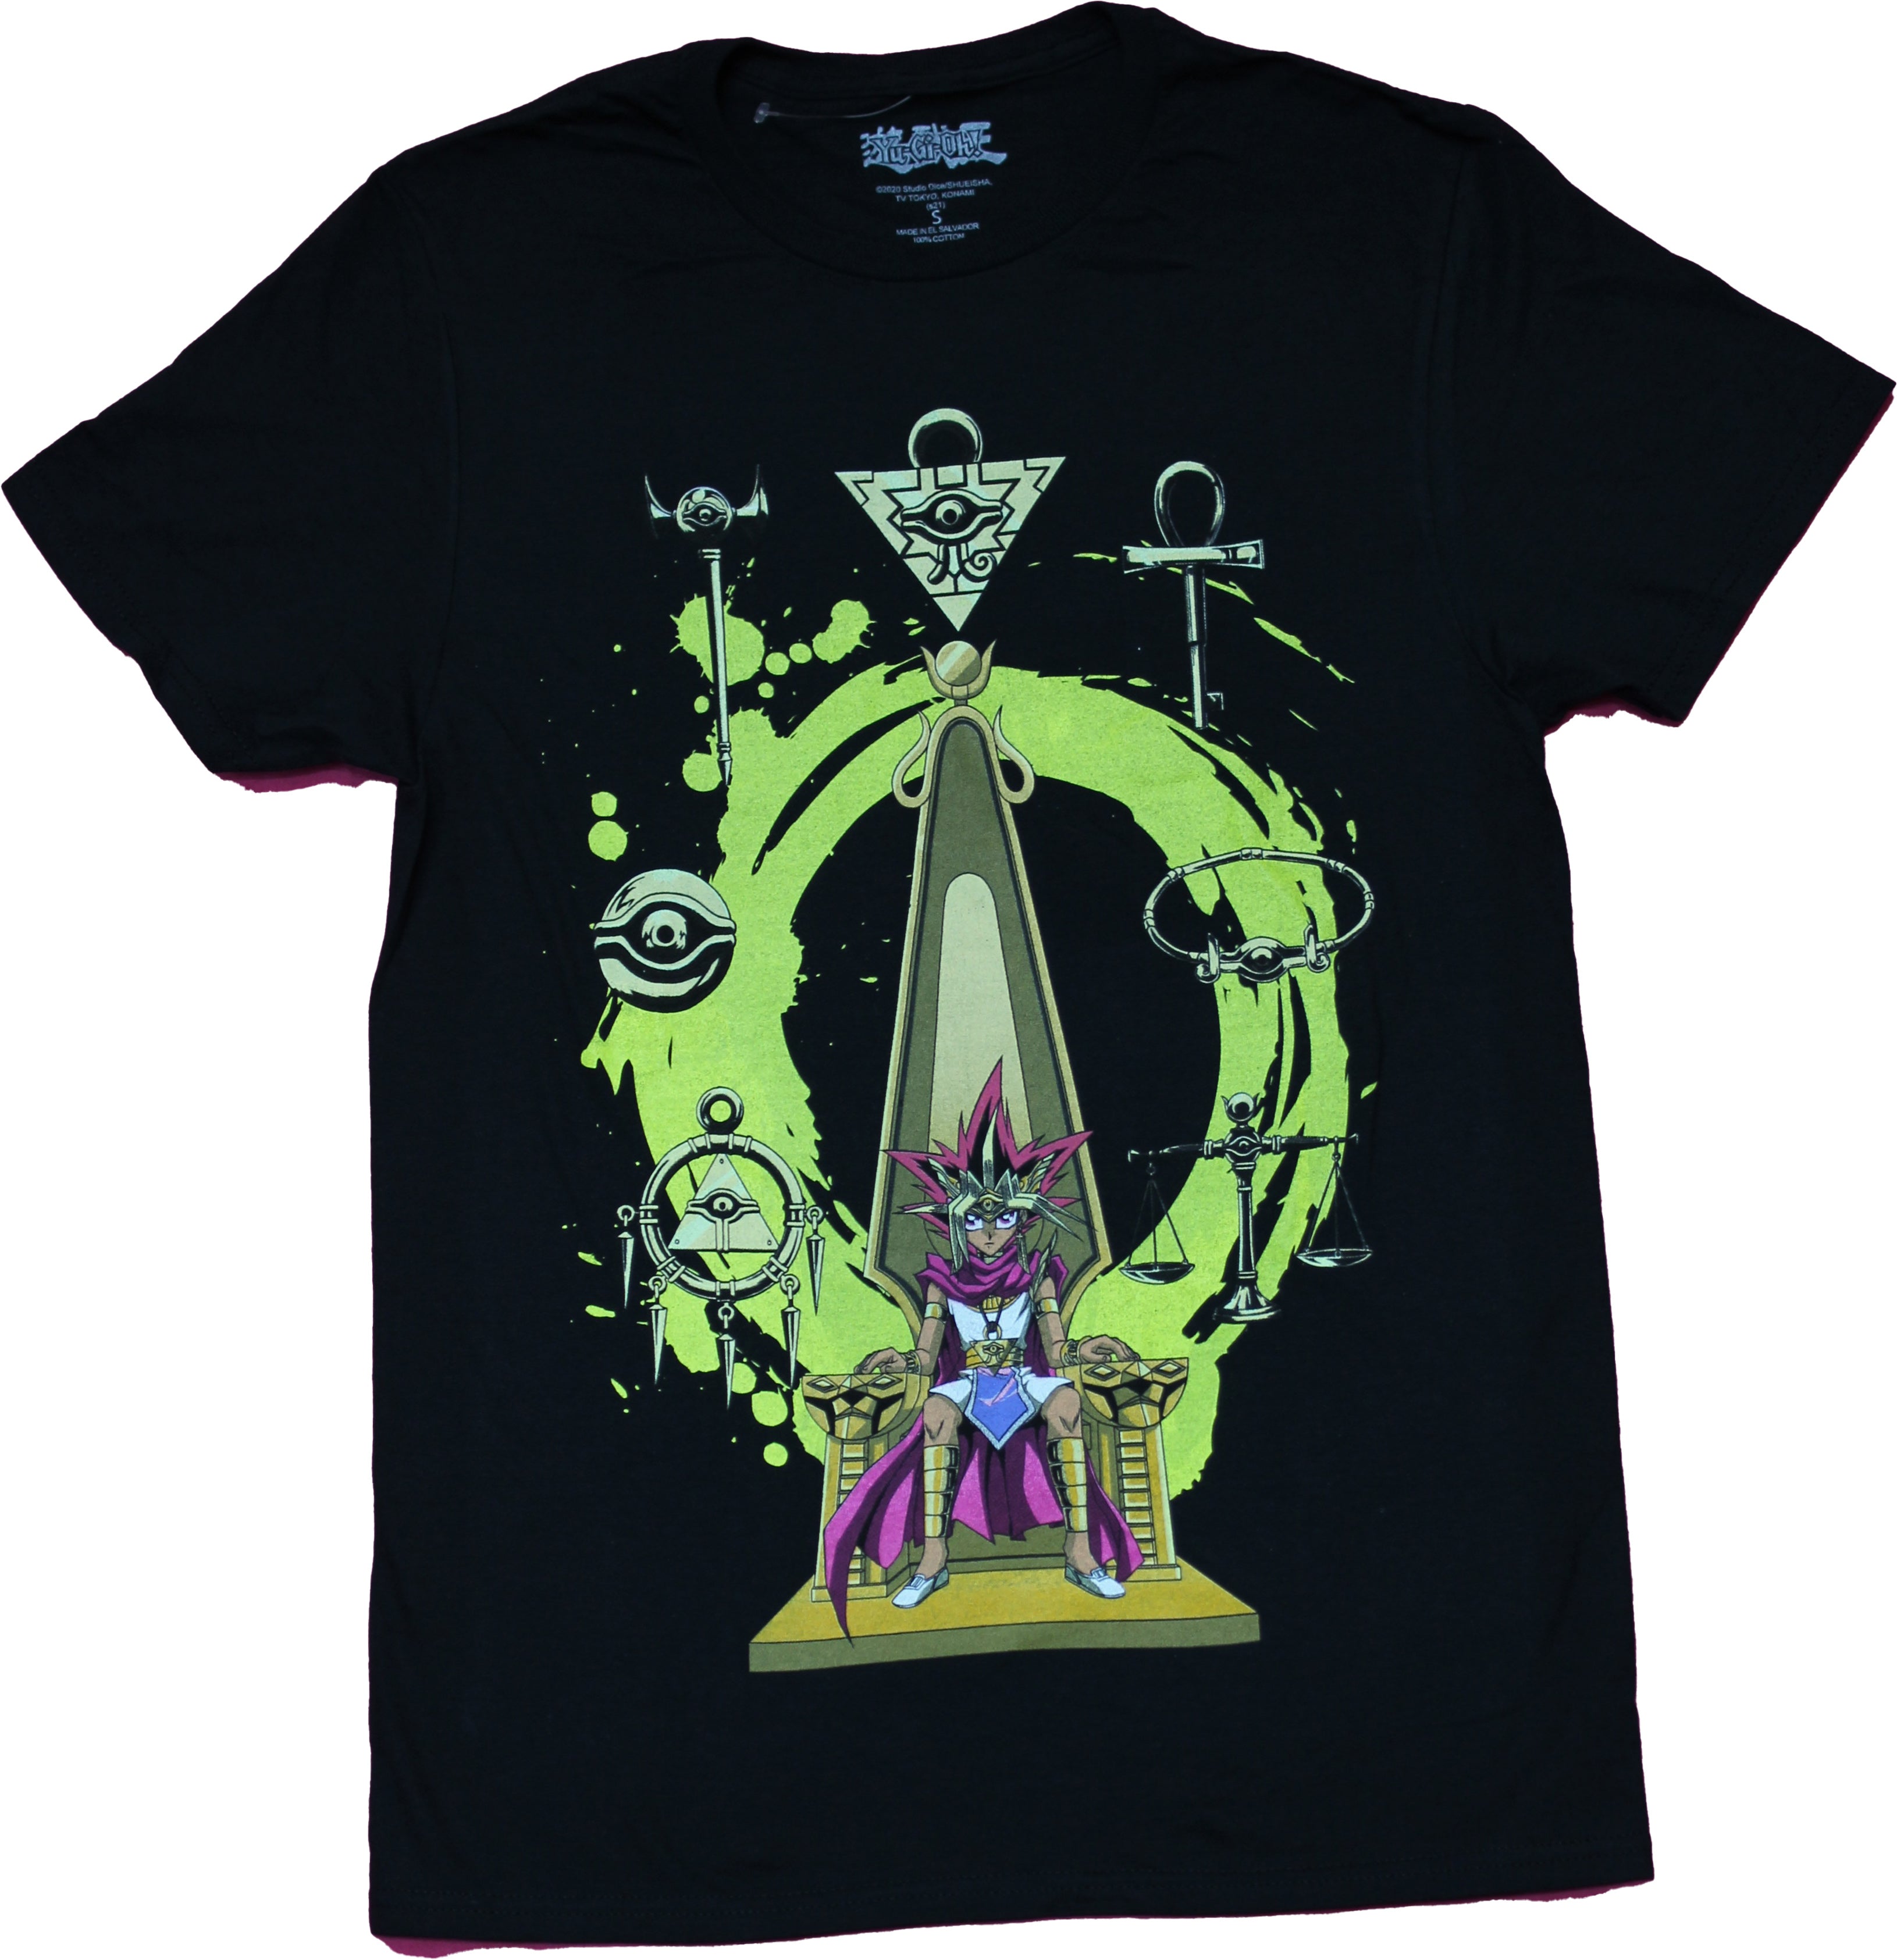 Yu-Gi-Oh Mens T-Shirt - Sitting on Throne Image